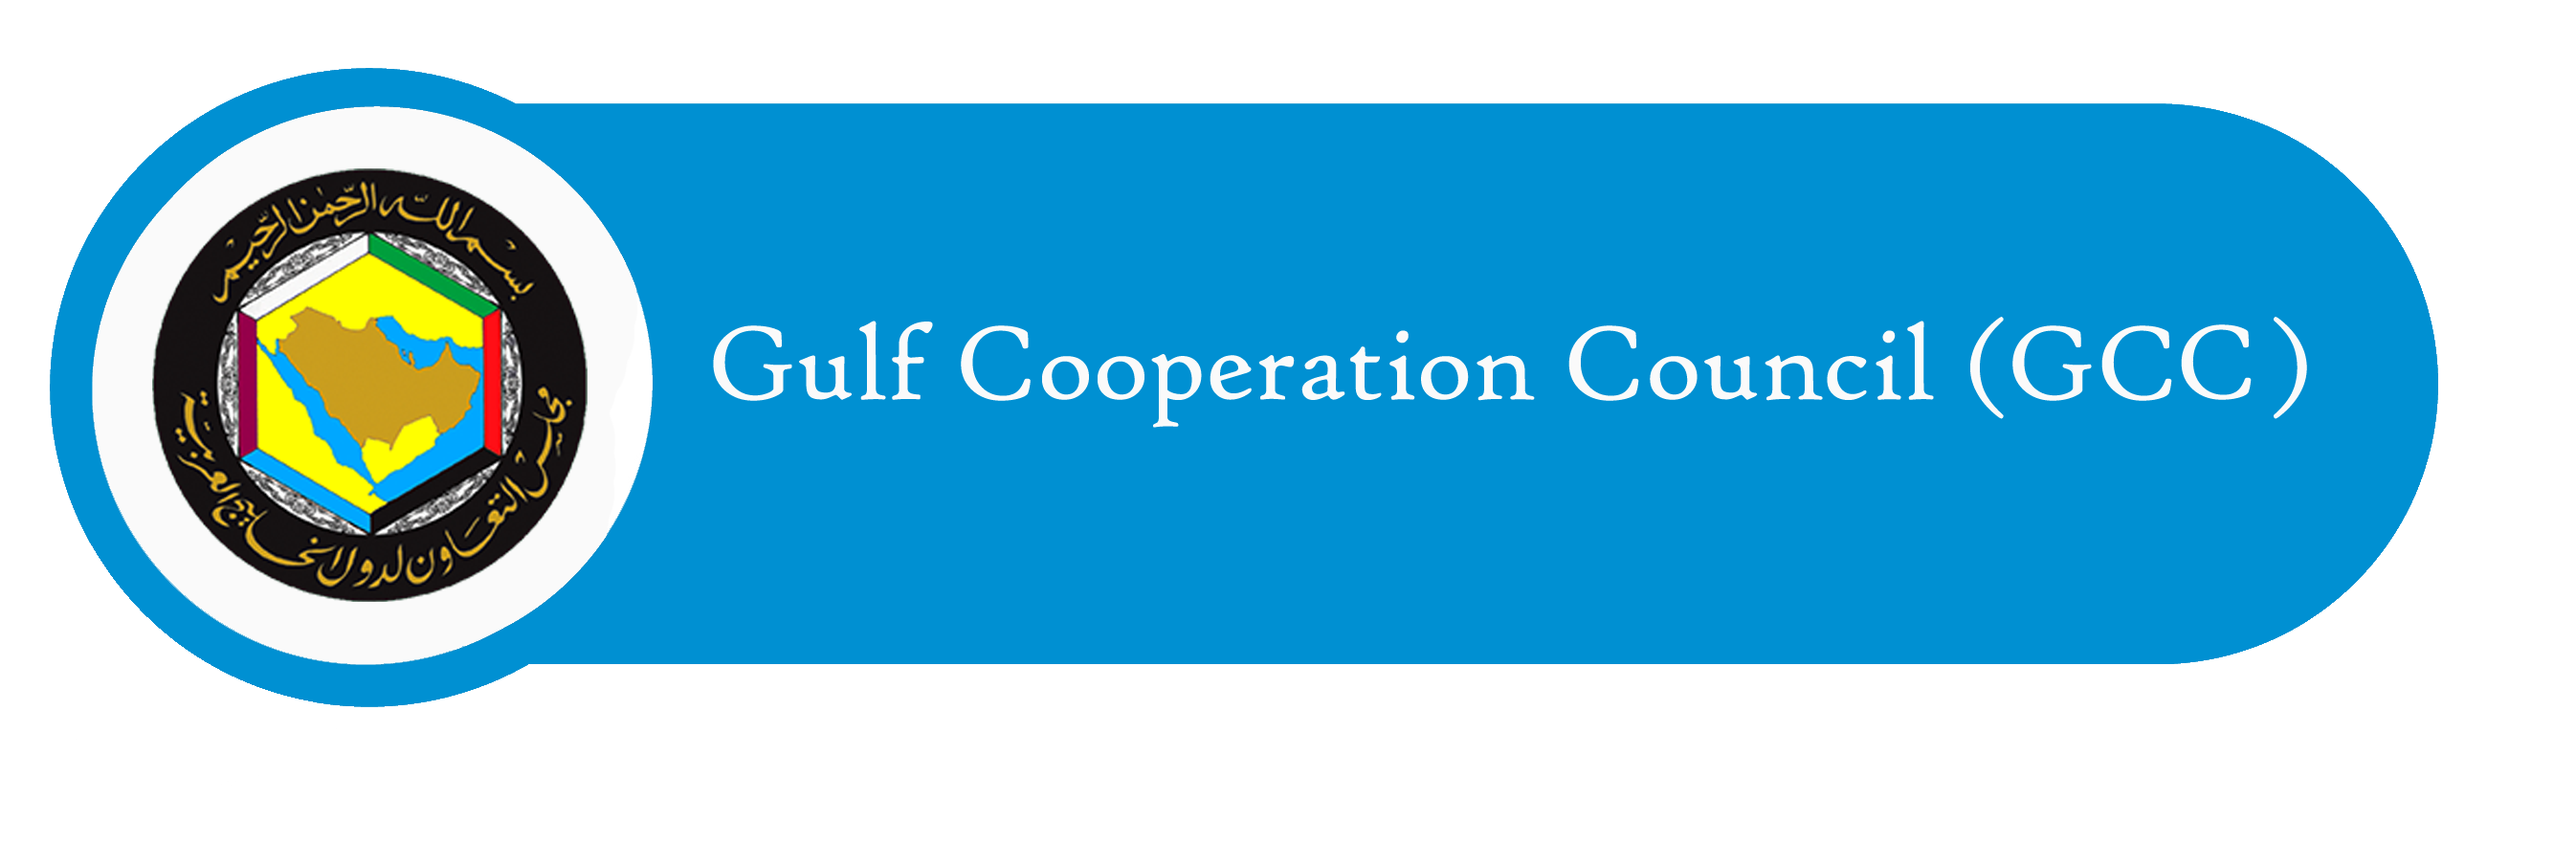 gulf cooperation council (gcc) - asean main portal